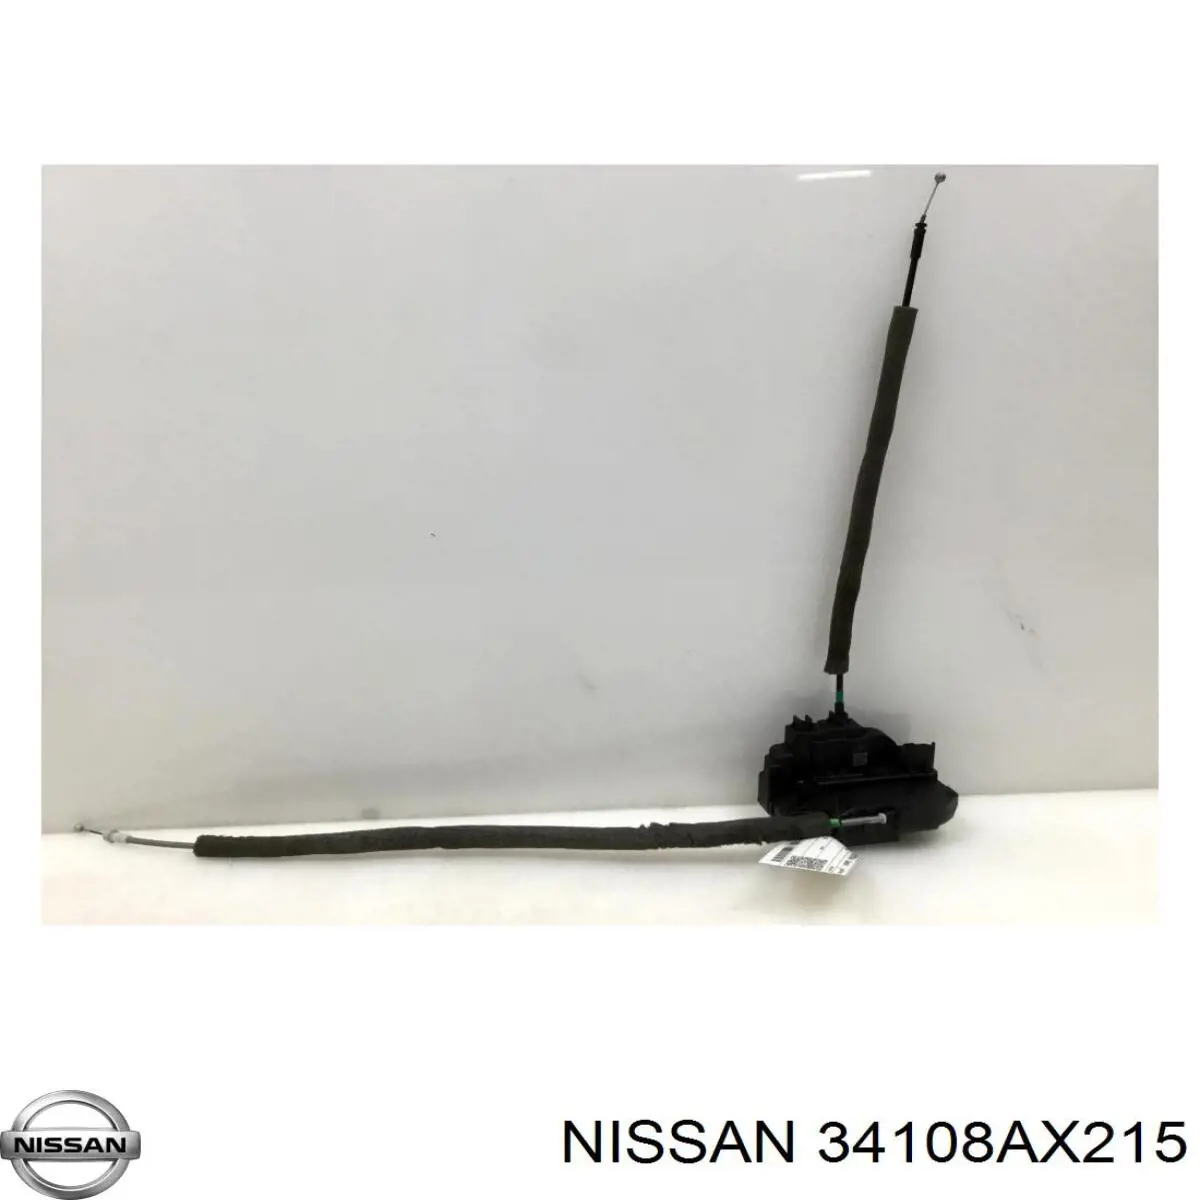 34108AX215 Nissan palanca de selectora de cambios